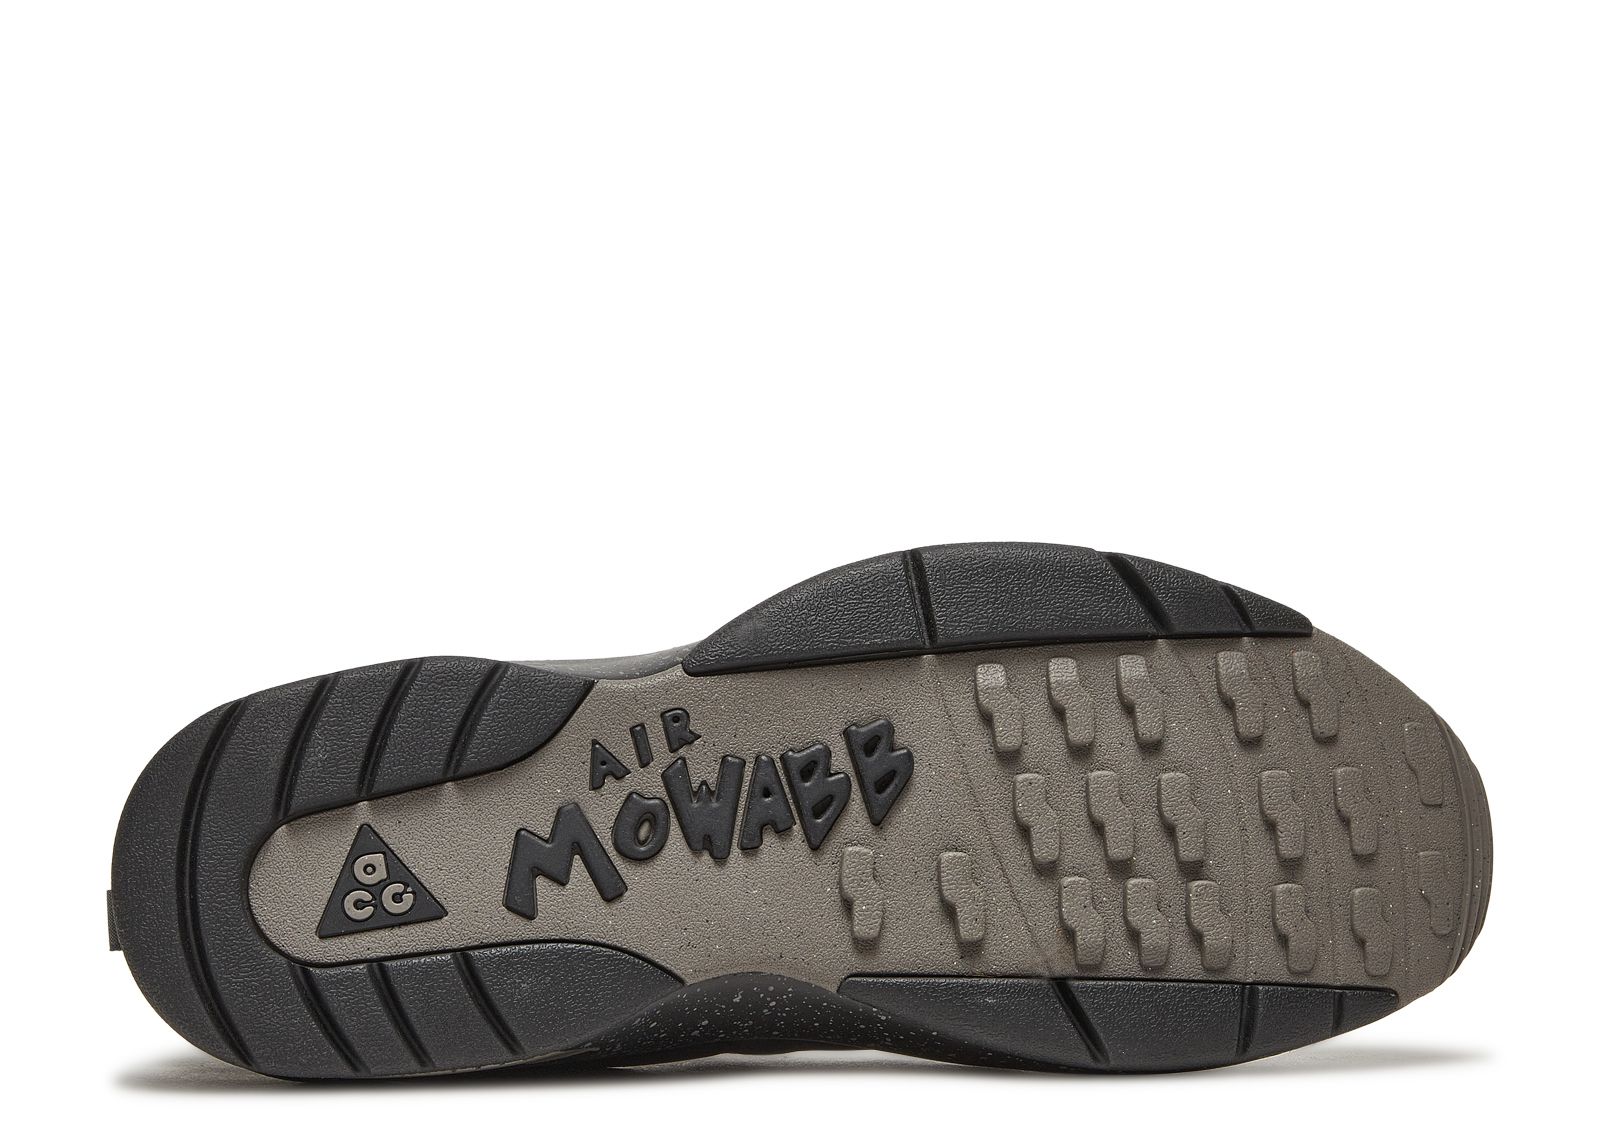 ACG Air Mowabb 'Off Noir' - Nike - DM0840 001 - off noir/black